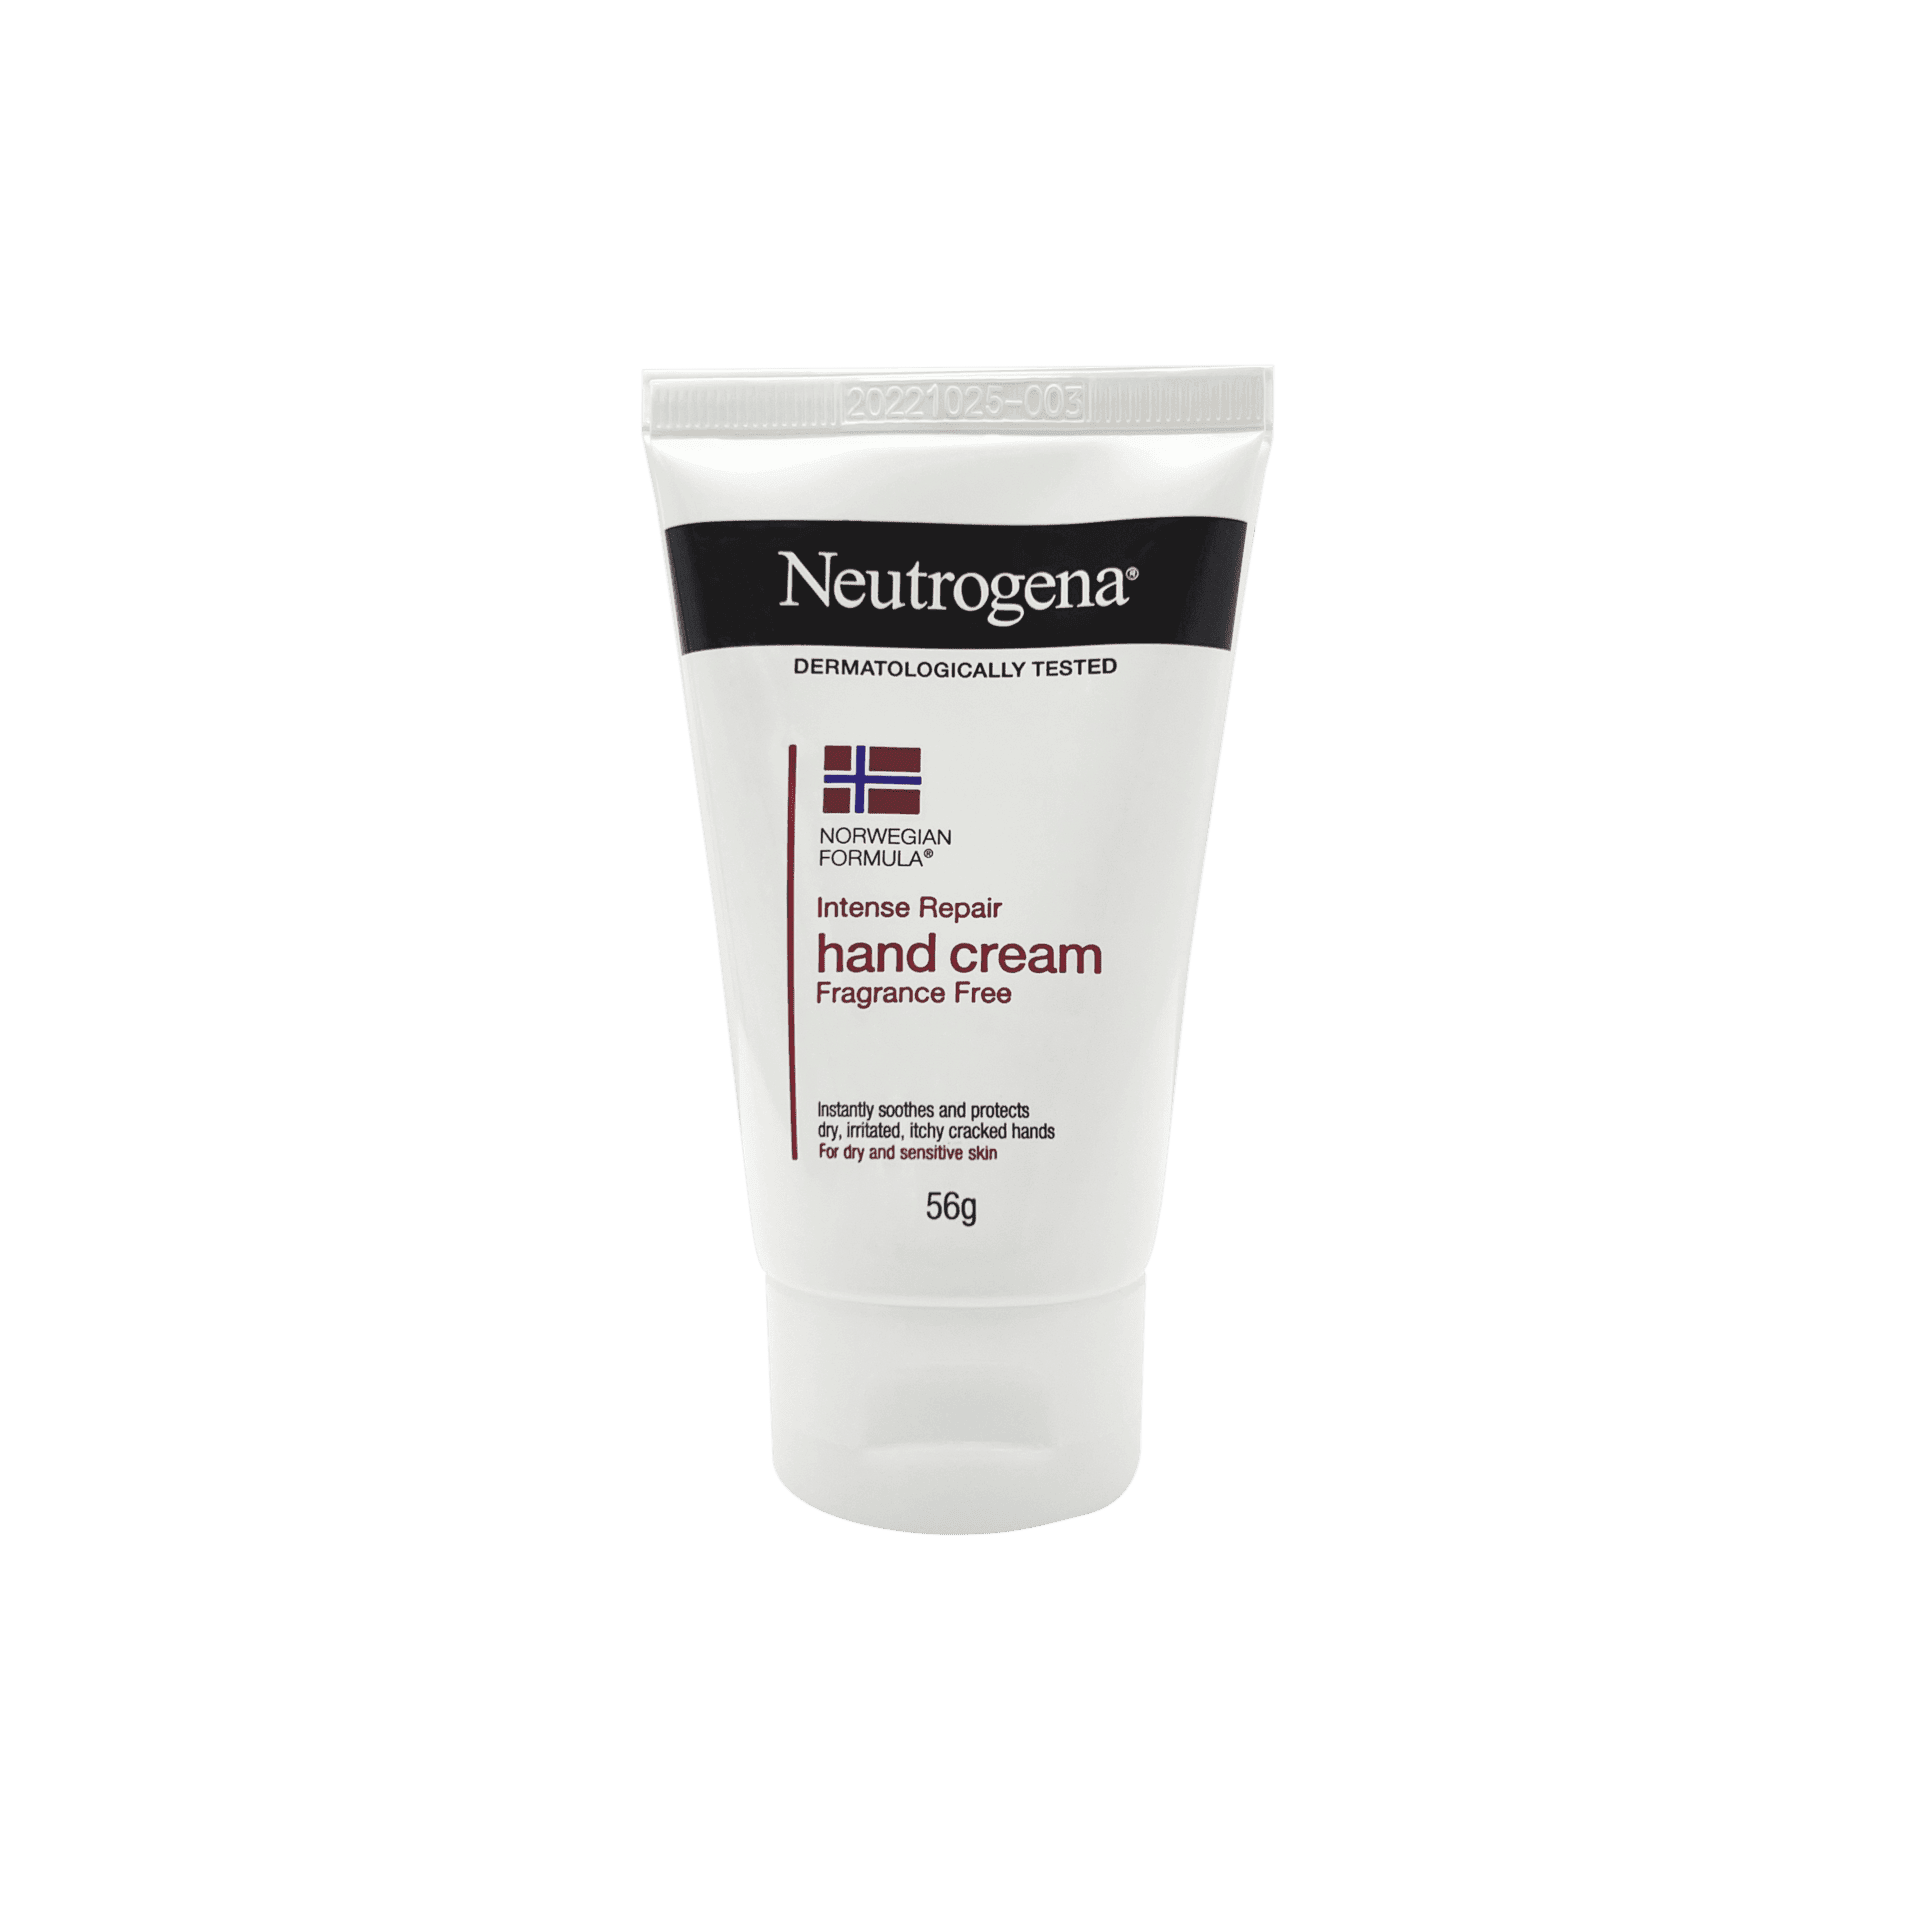 Neutrogena Intense Repair Hand Cream Fragrance Free